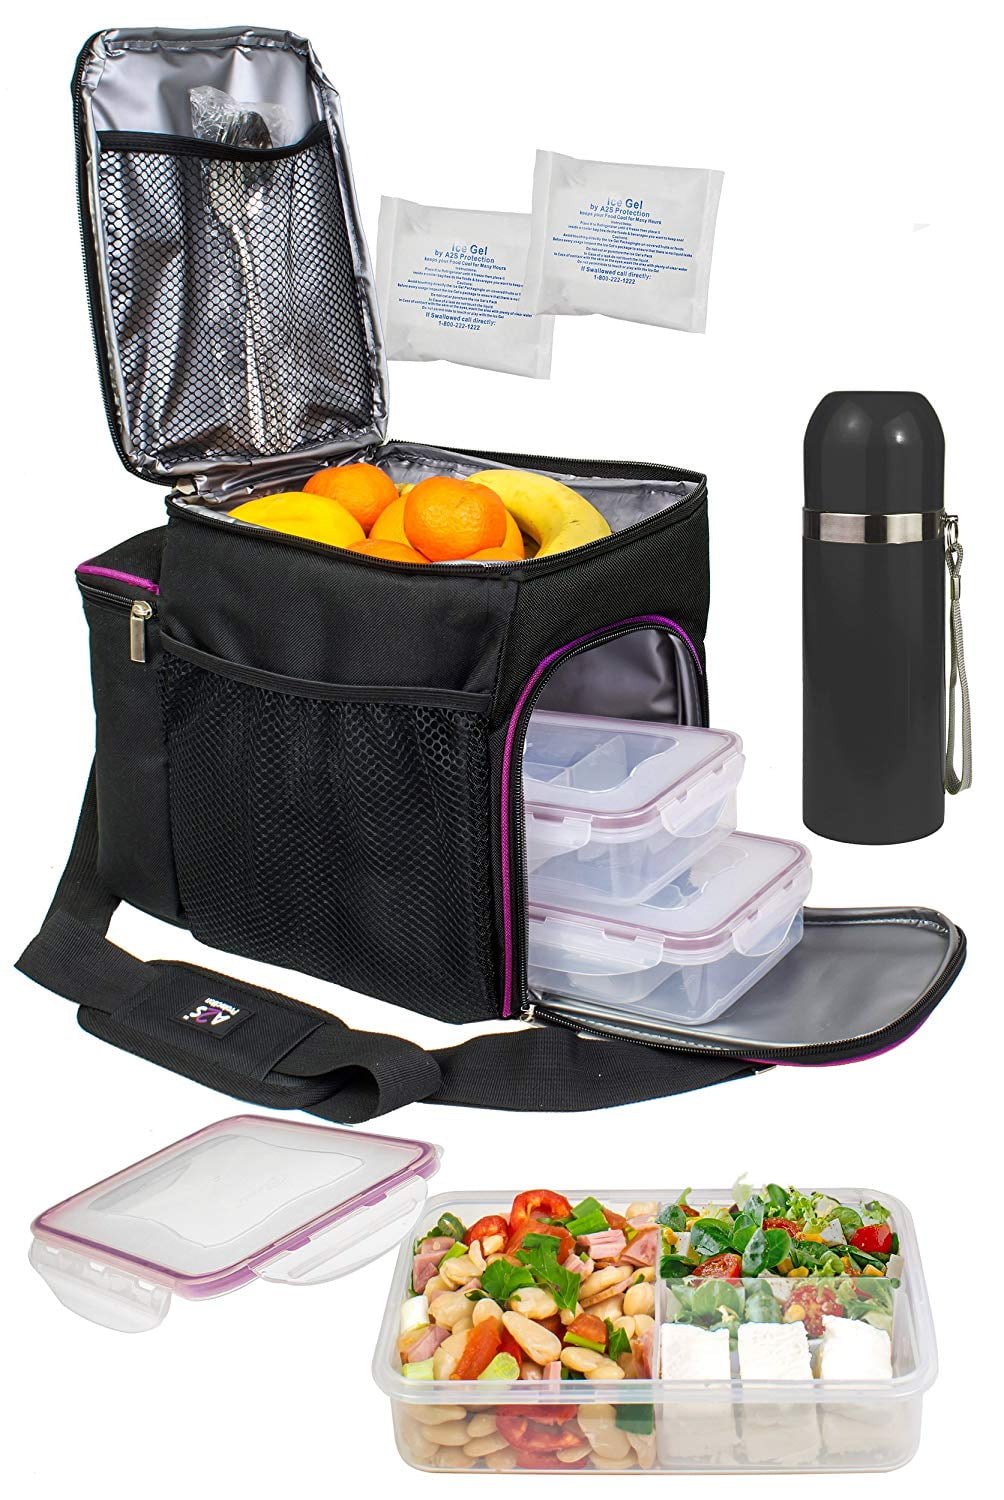  Oval Portion Control & Food Bag Lunch Set 163538